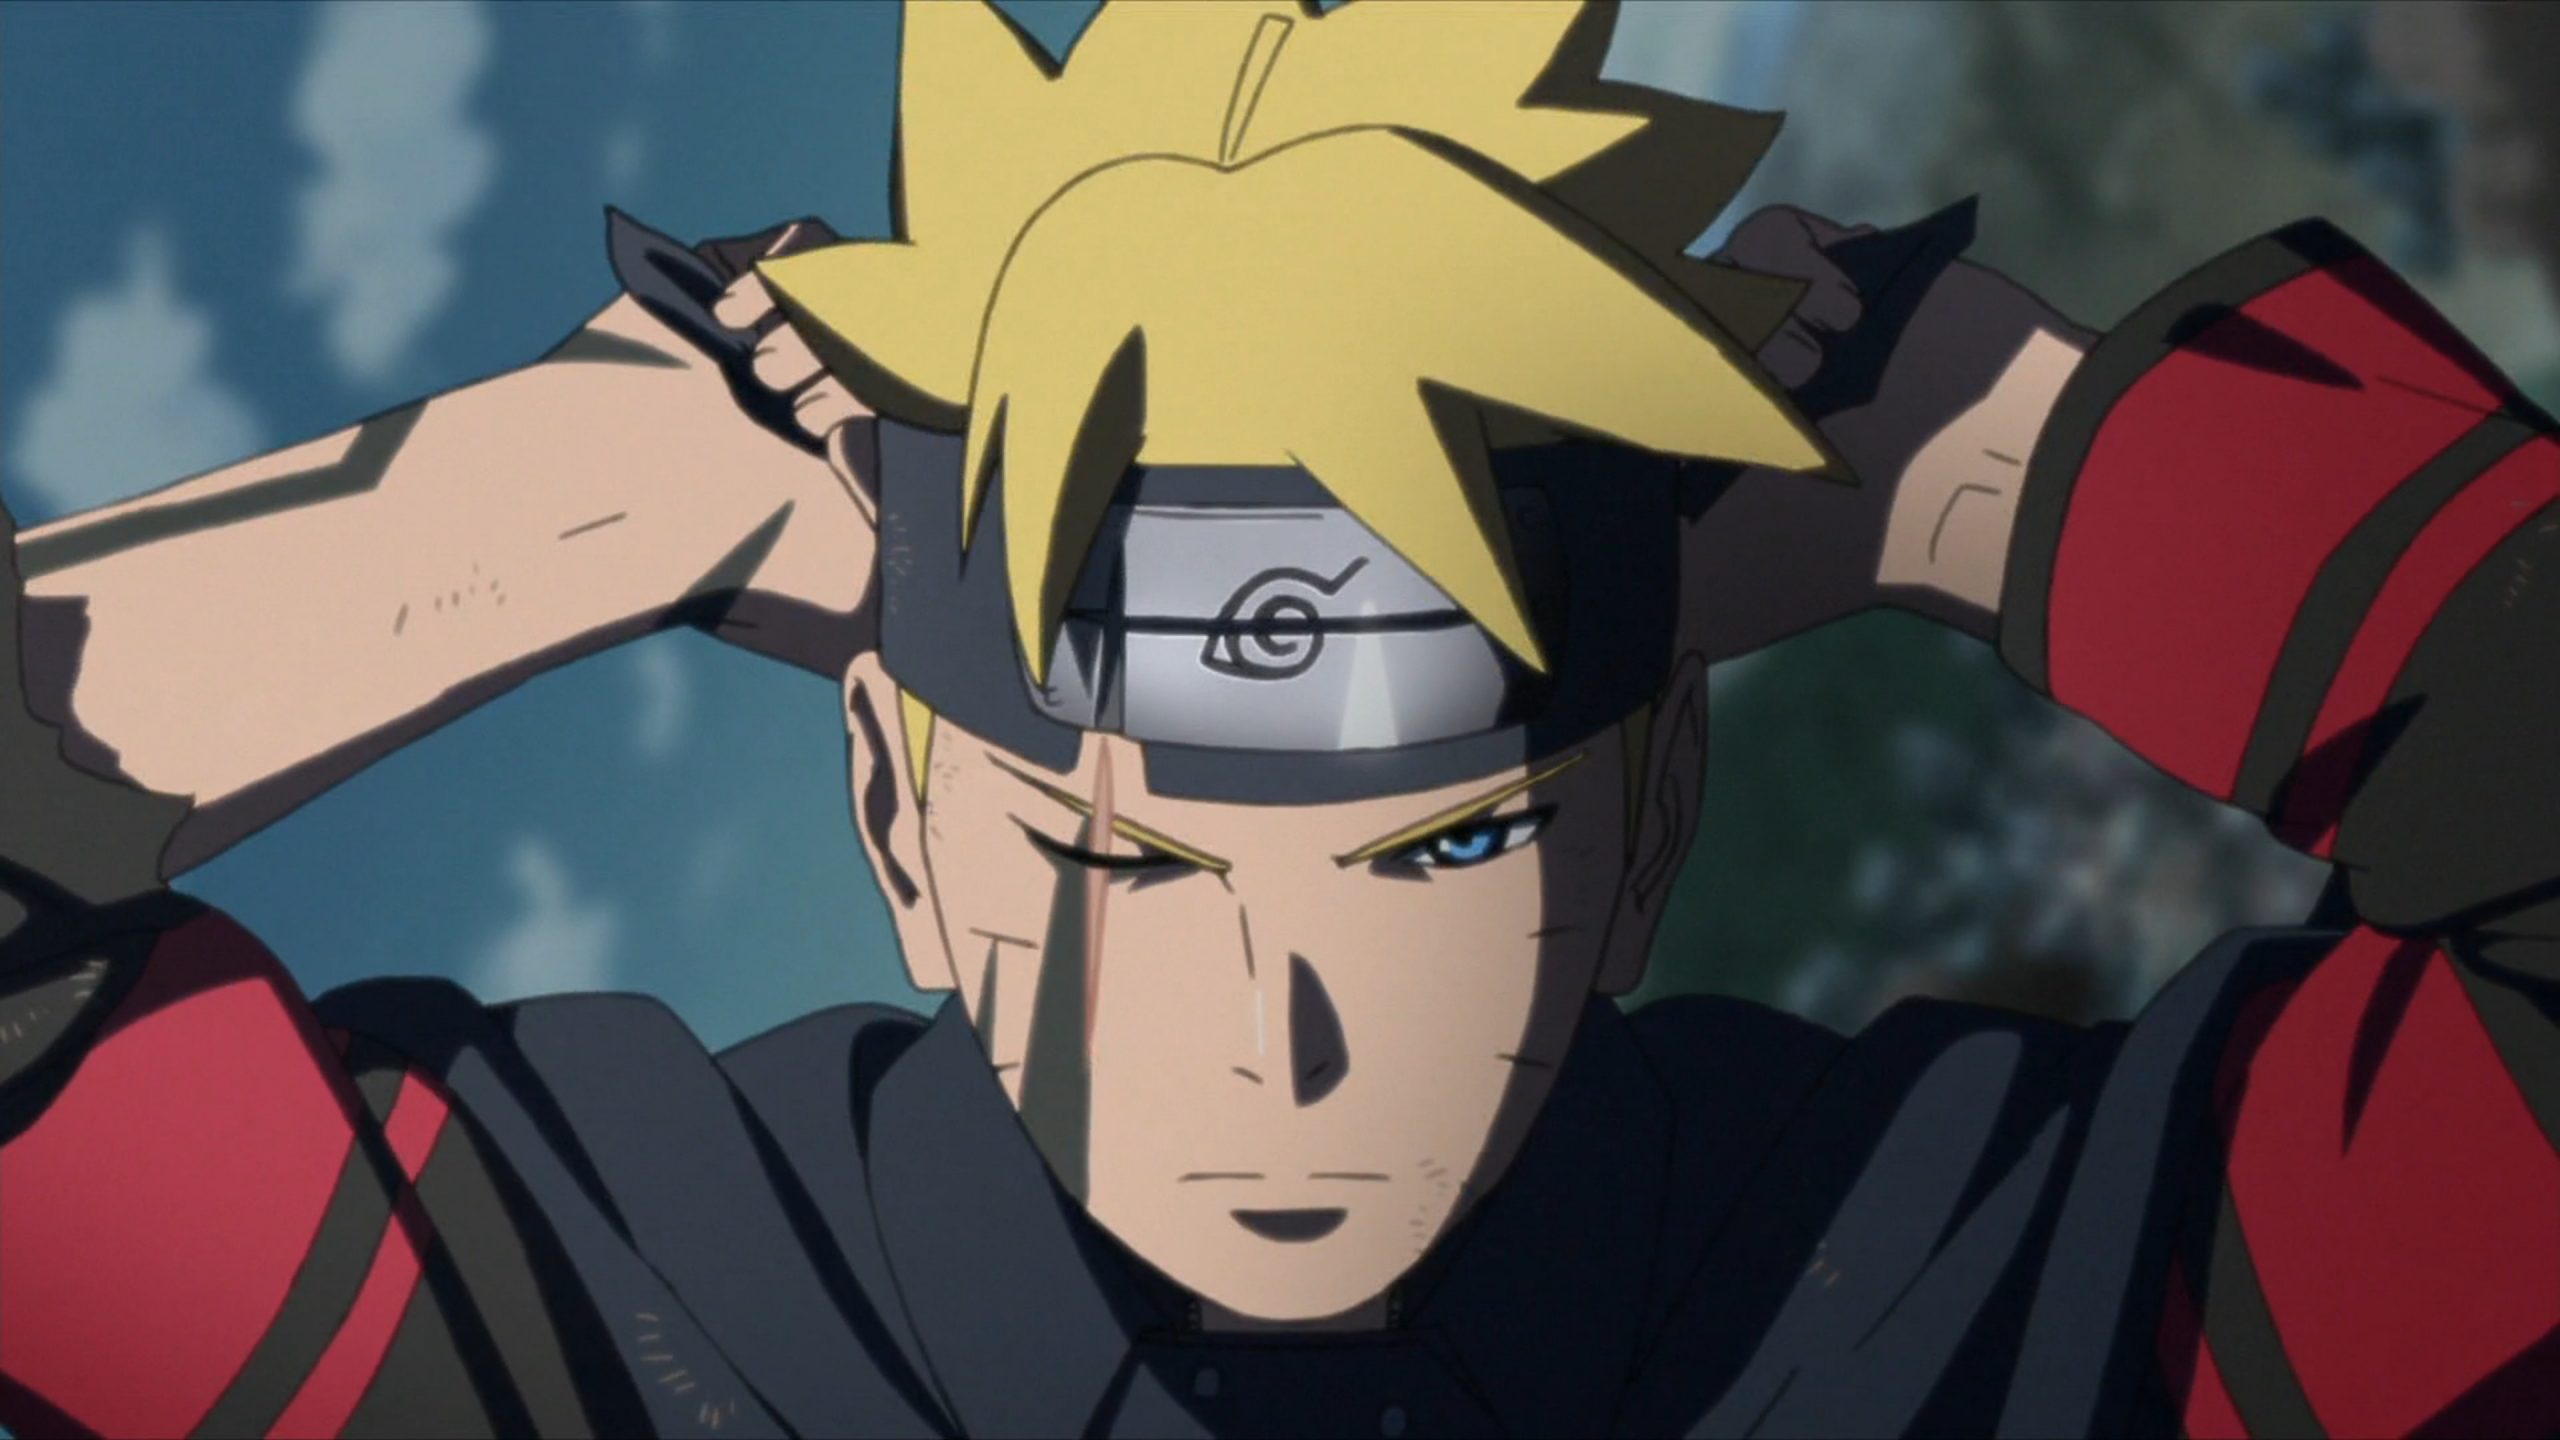 Boruto Explorer - Ver as partes engraçadas de Naruto clássico é